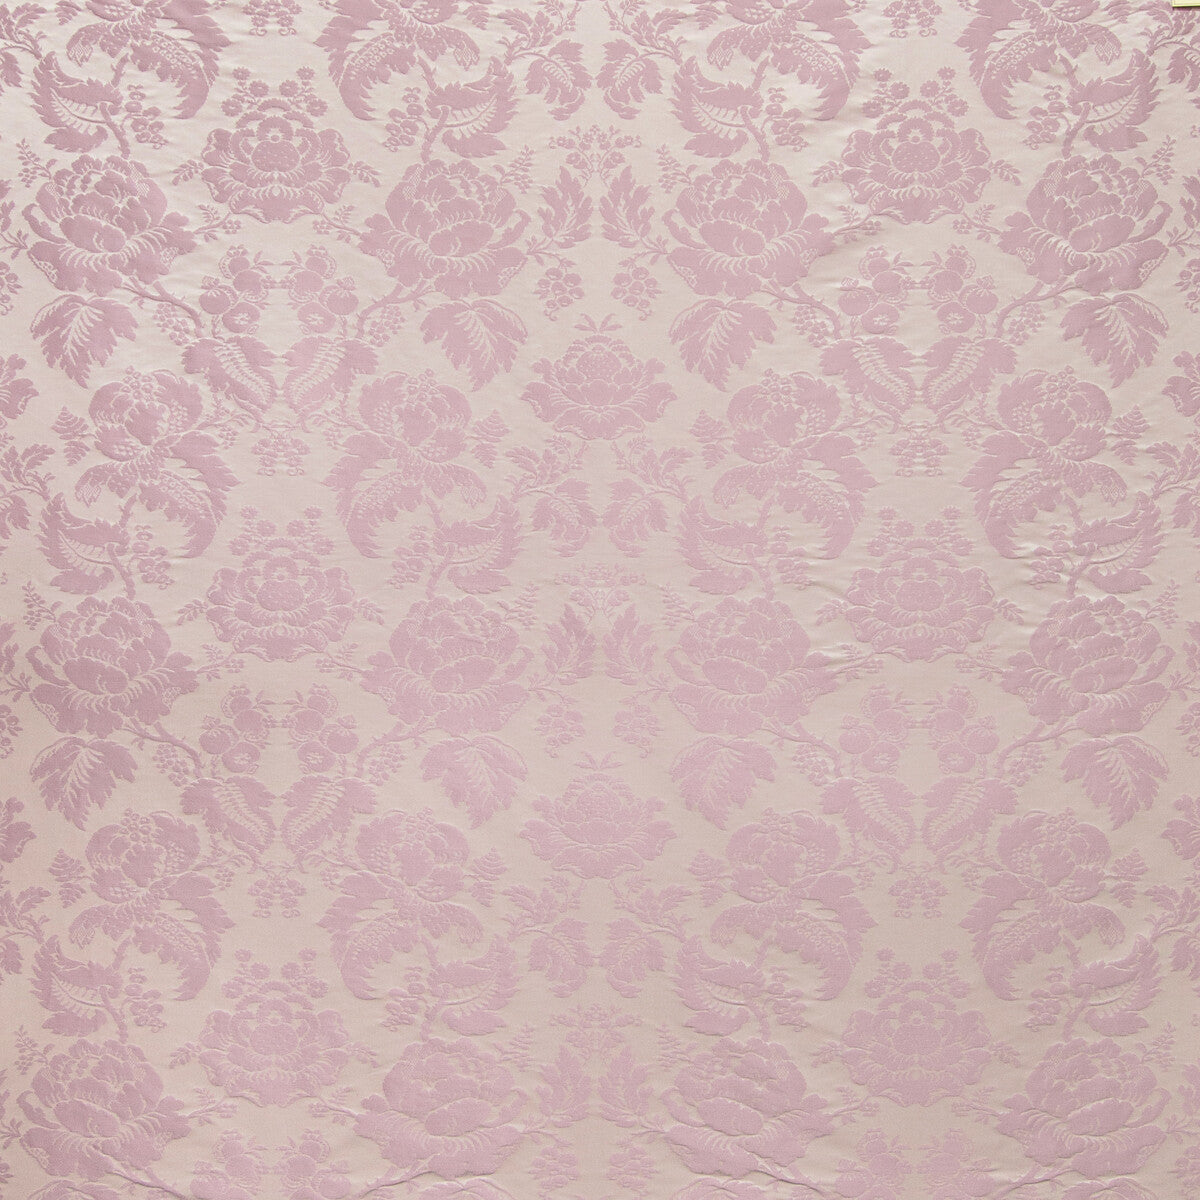 Moulins Damask fabric in amethyst color - pattern BR-81035.110.0 - by Brunschwig &amp; Fils